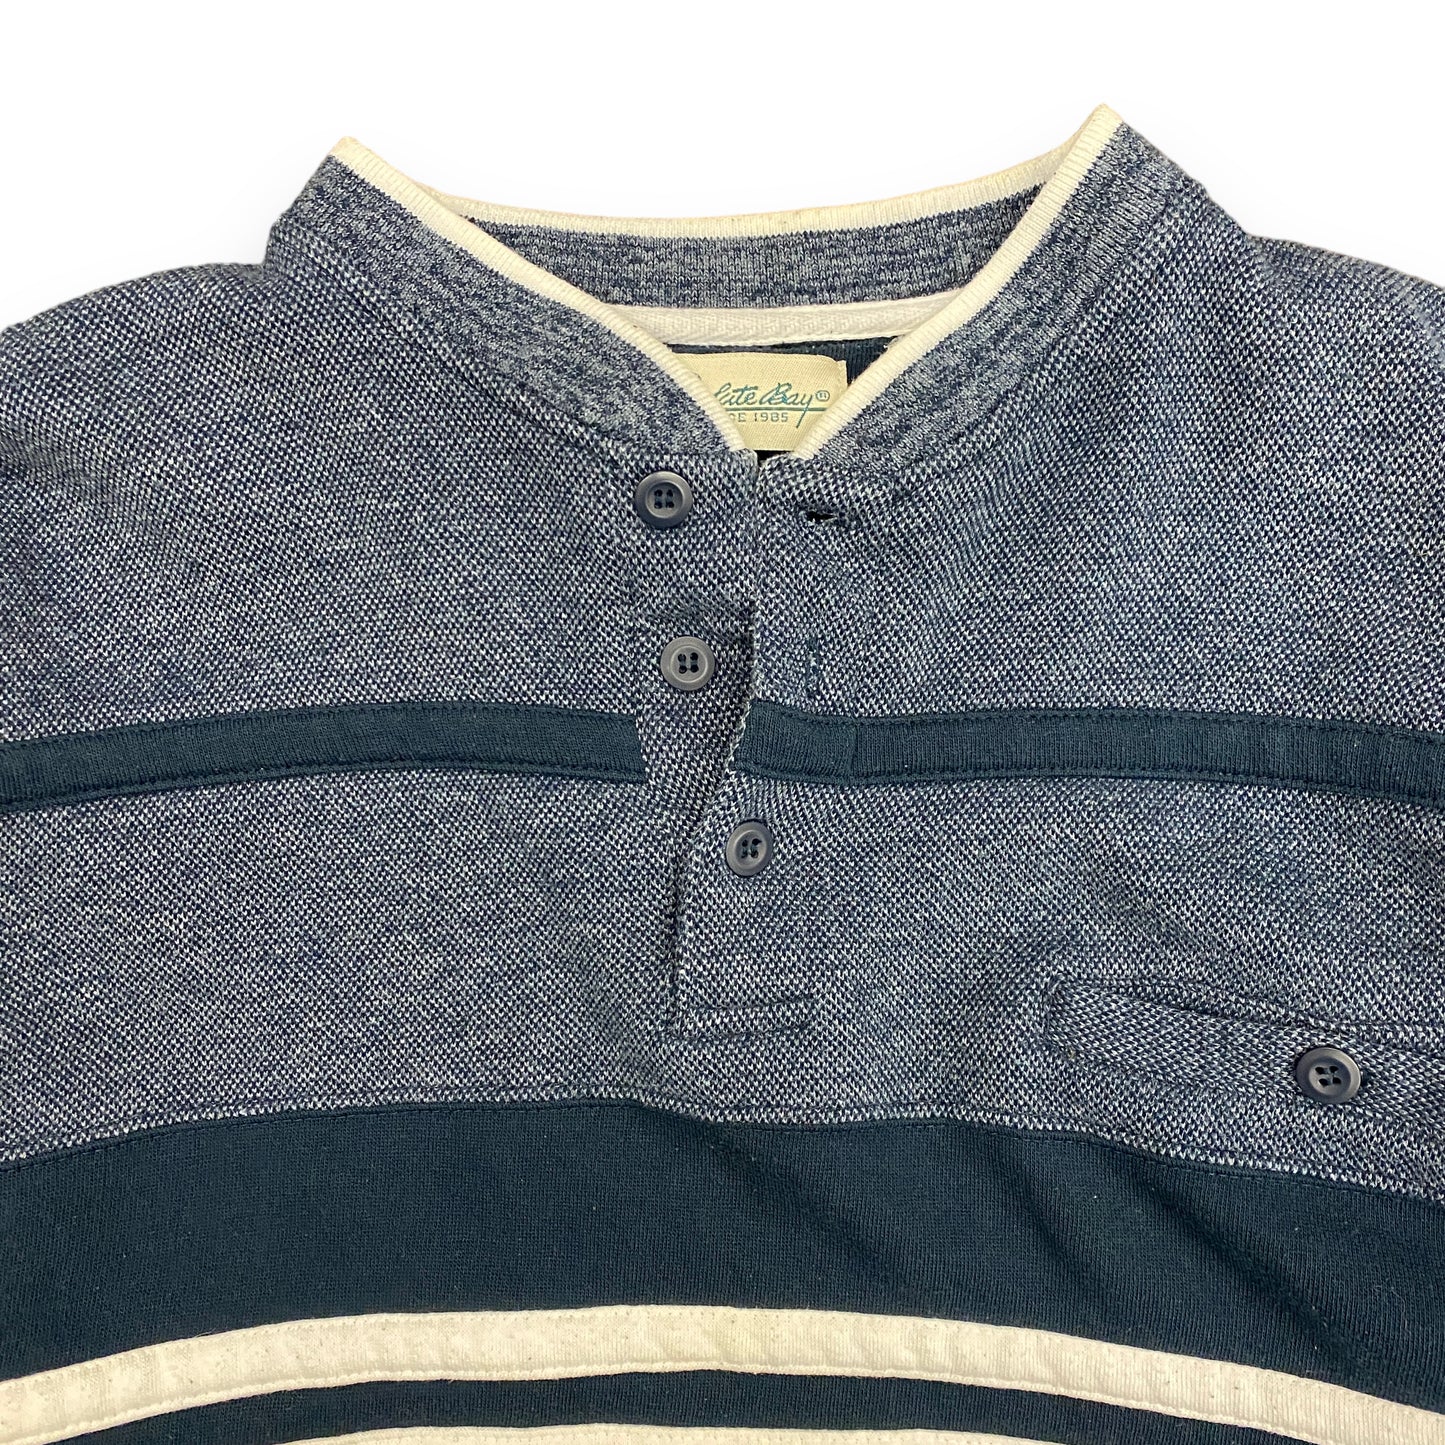 Vintage 90s Navy Blue Striped Henley Sweatshirt - Size Large